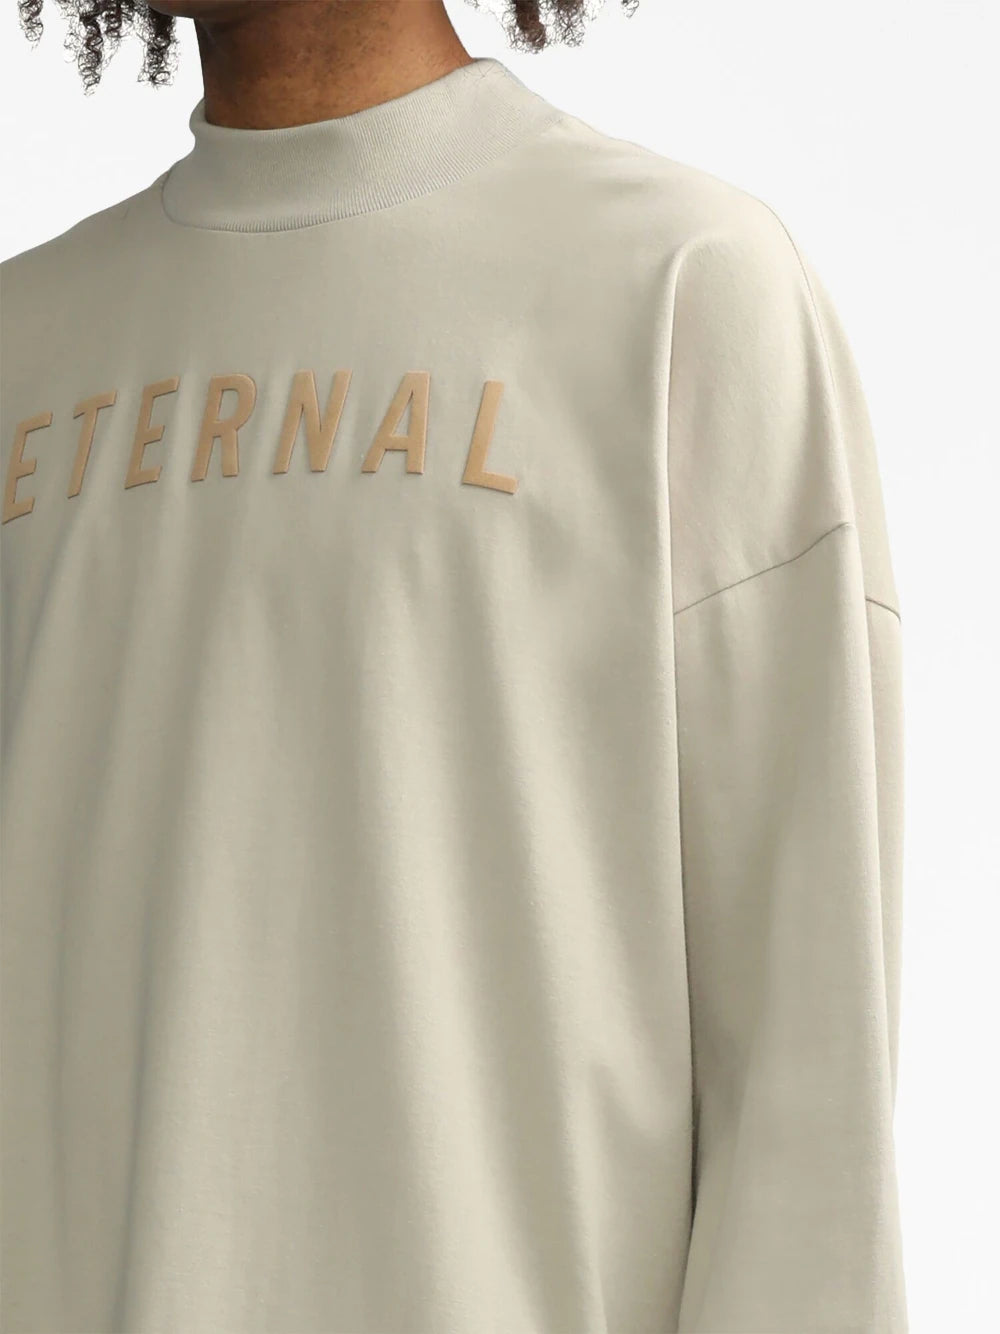 FEAR OF GOD Eternal Cotton Long Sleeve T- Shirt Cement - MAISONDEFASHION.COM